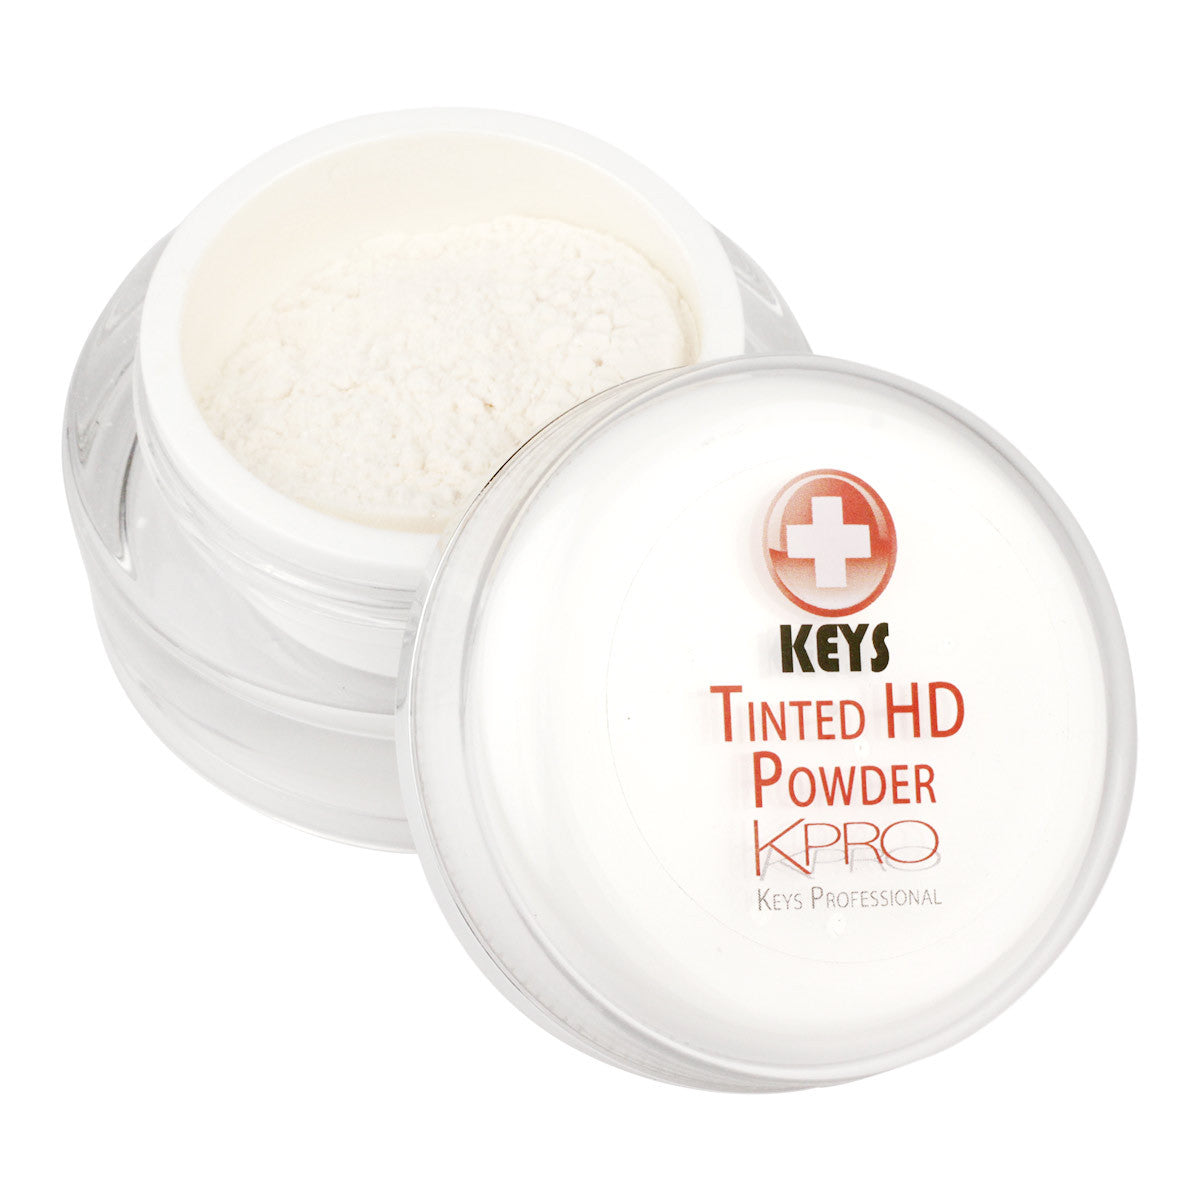 Primary image of KPRO Tinted HD Powder